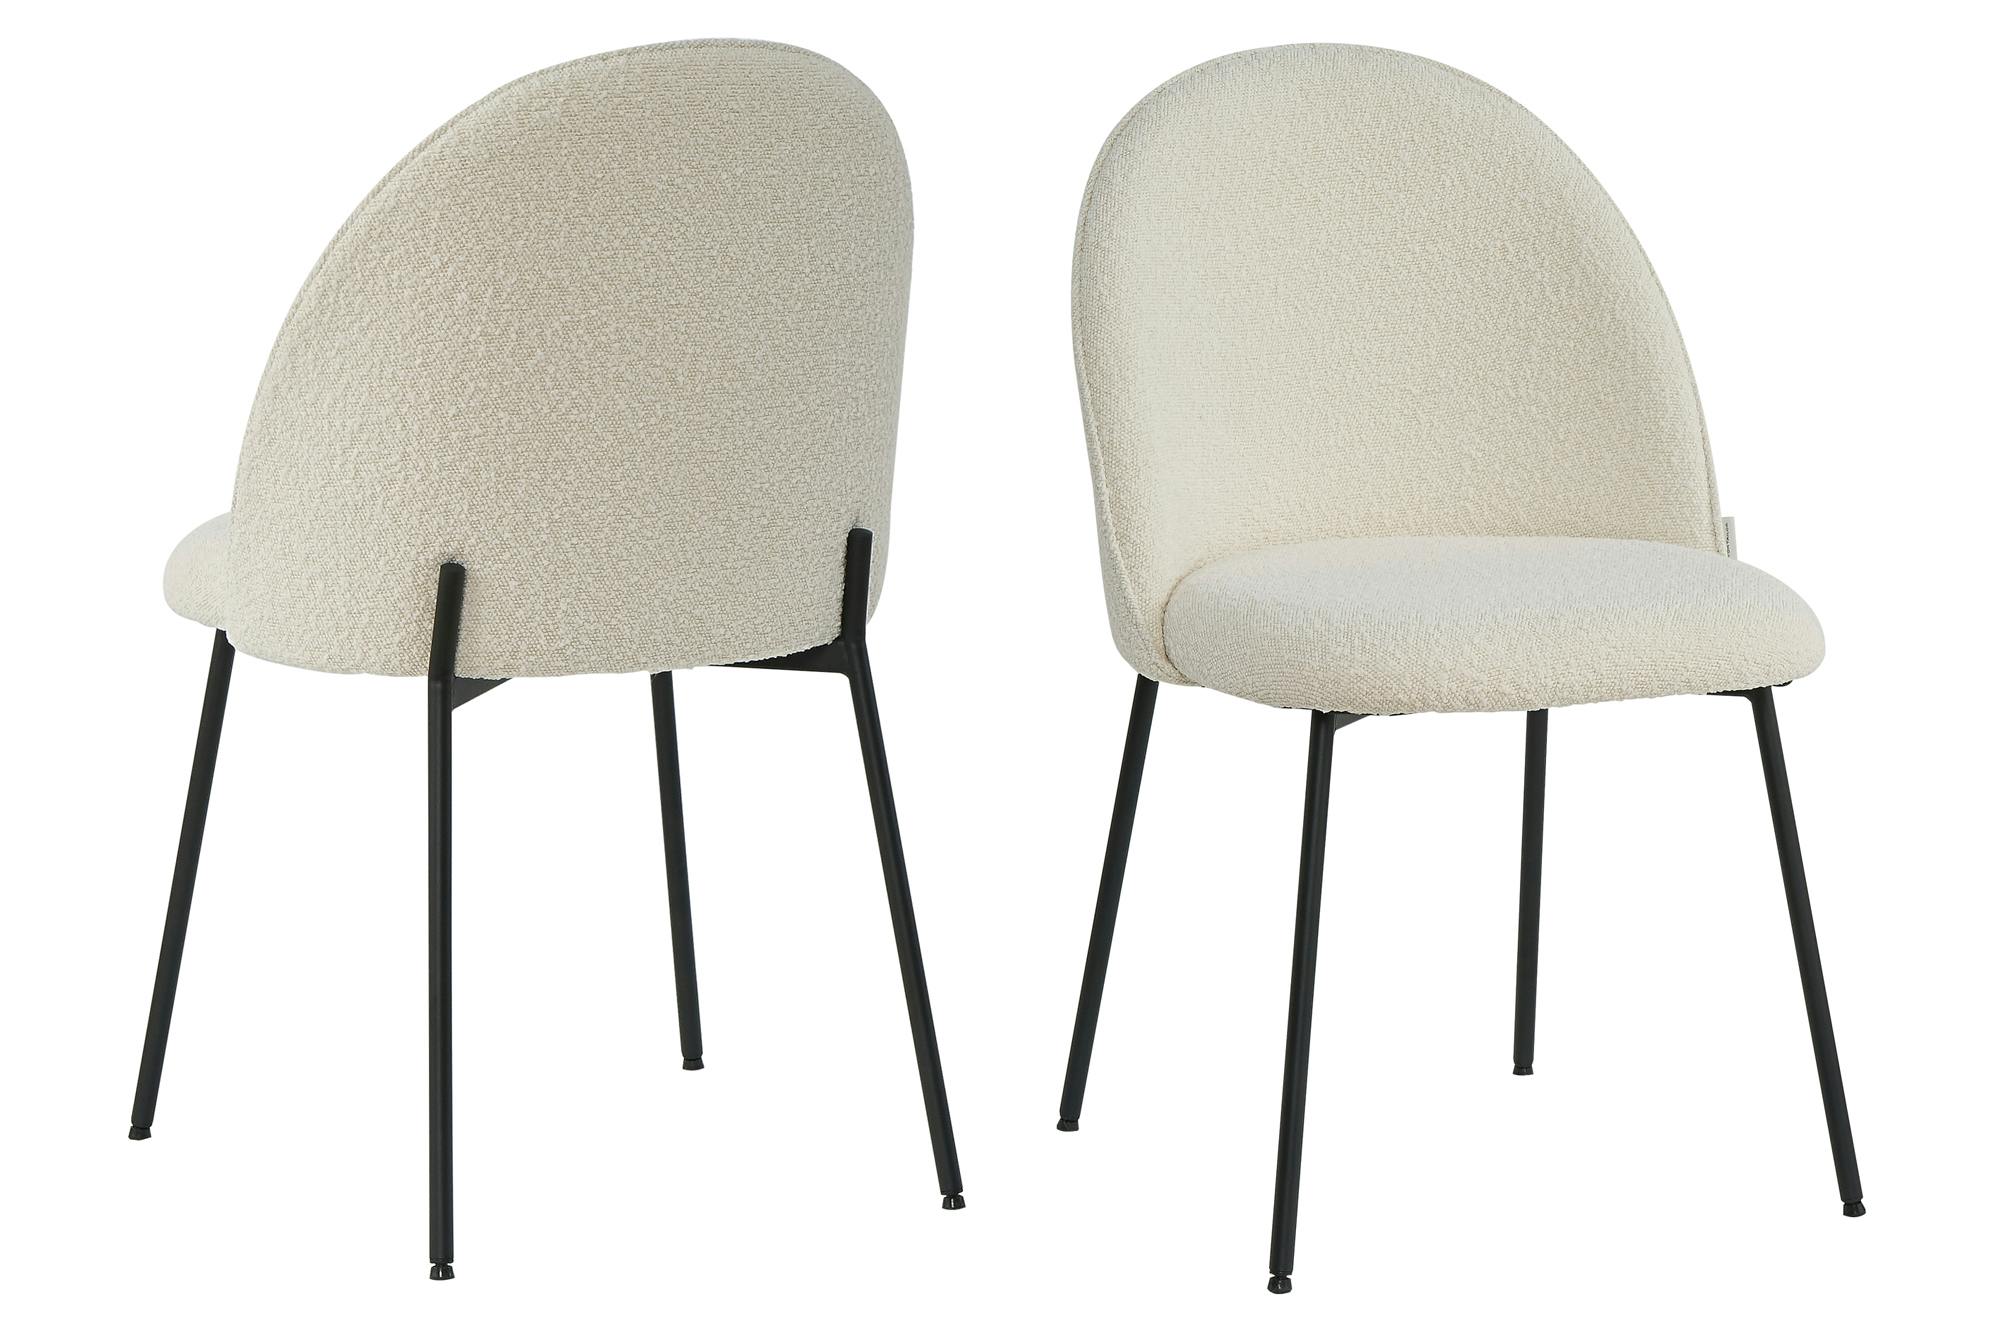 SIT Möbel Tom Tailor Stuhl 2er-Set | T-Bouclé Pad Chair | gepolstert beige|  Beine Metall schwarz | B57xT54xH52cm |02412-03 |Serie SIT&CHAIRS | METRO  Marktplatz